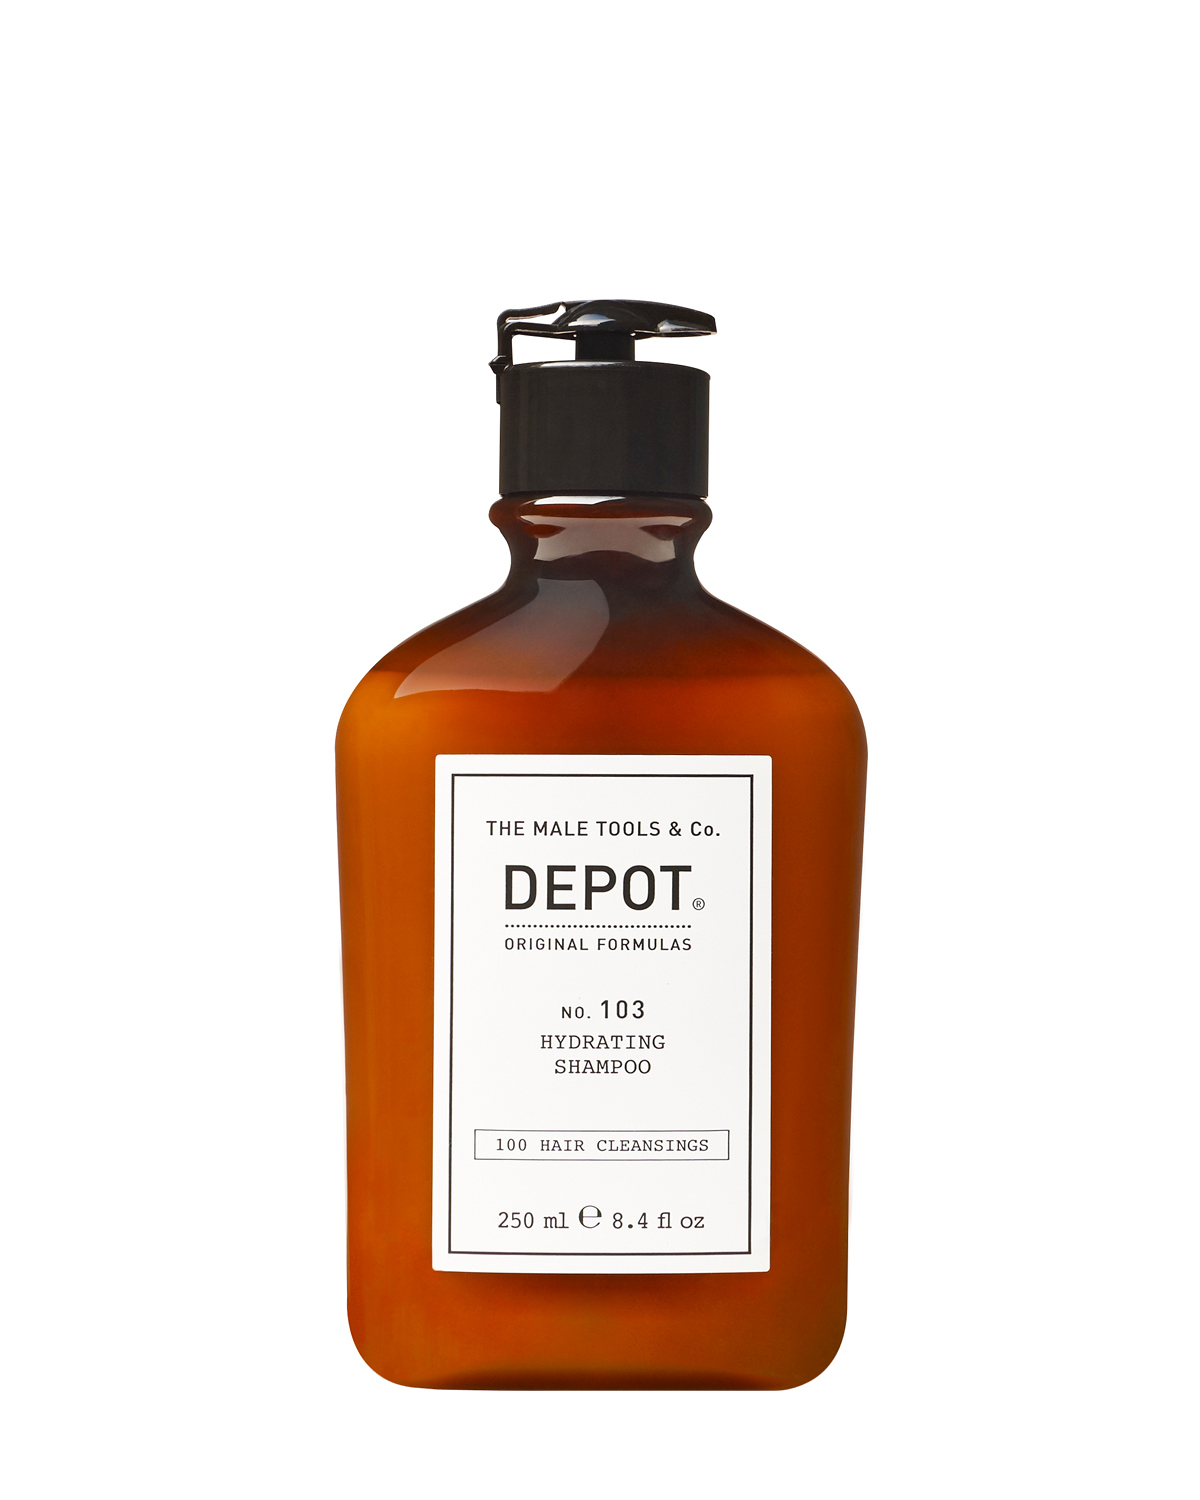 Depot NO. 103 Hydrating Shampoo - moisturizing shampoo